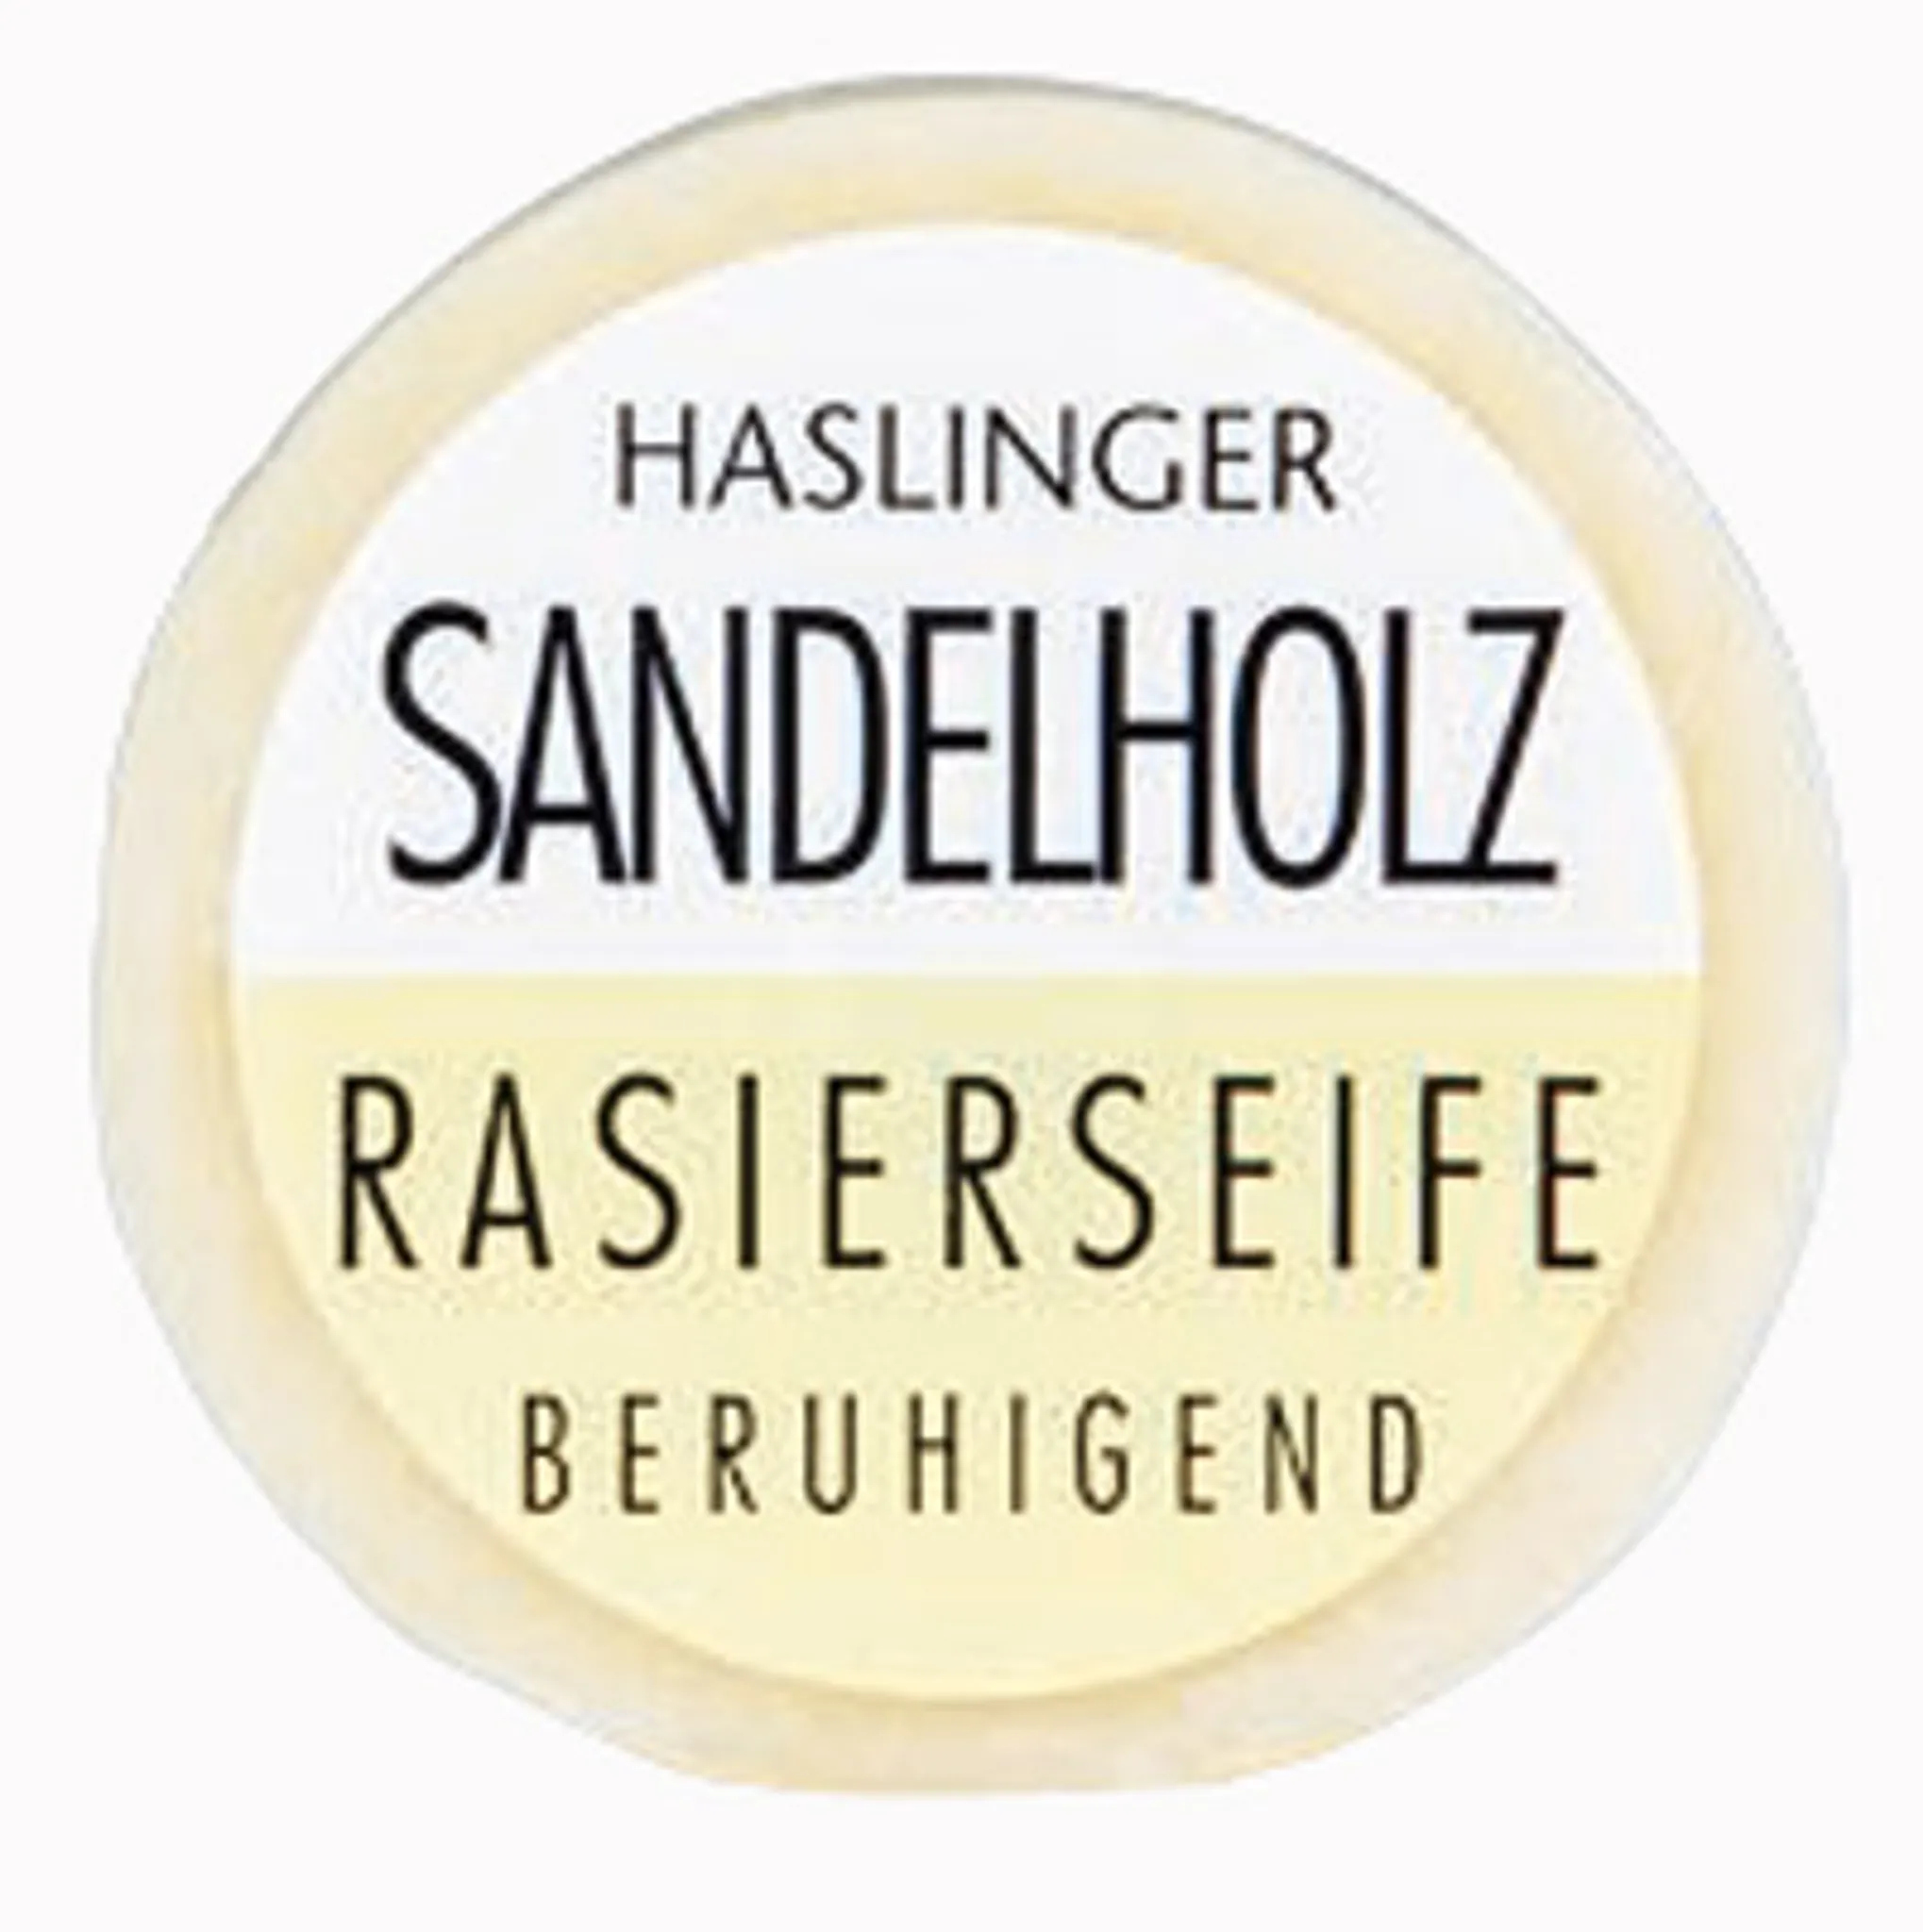 Rasierseife Haslinger Sandelholz beruhigend